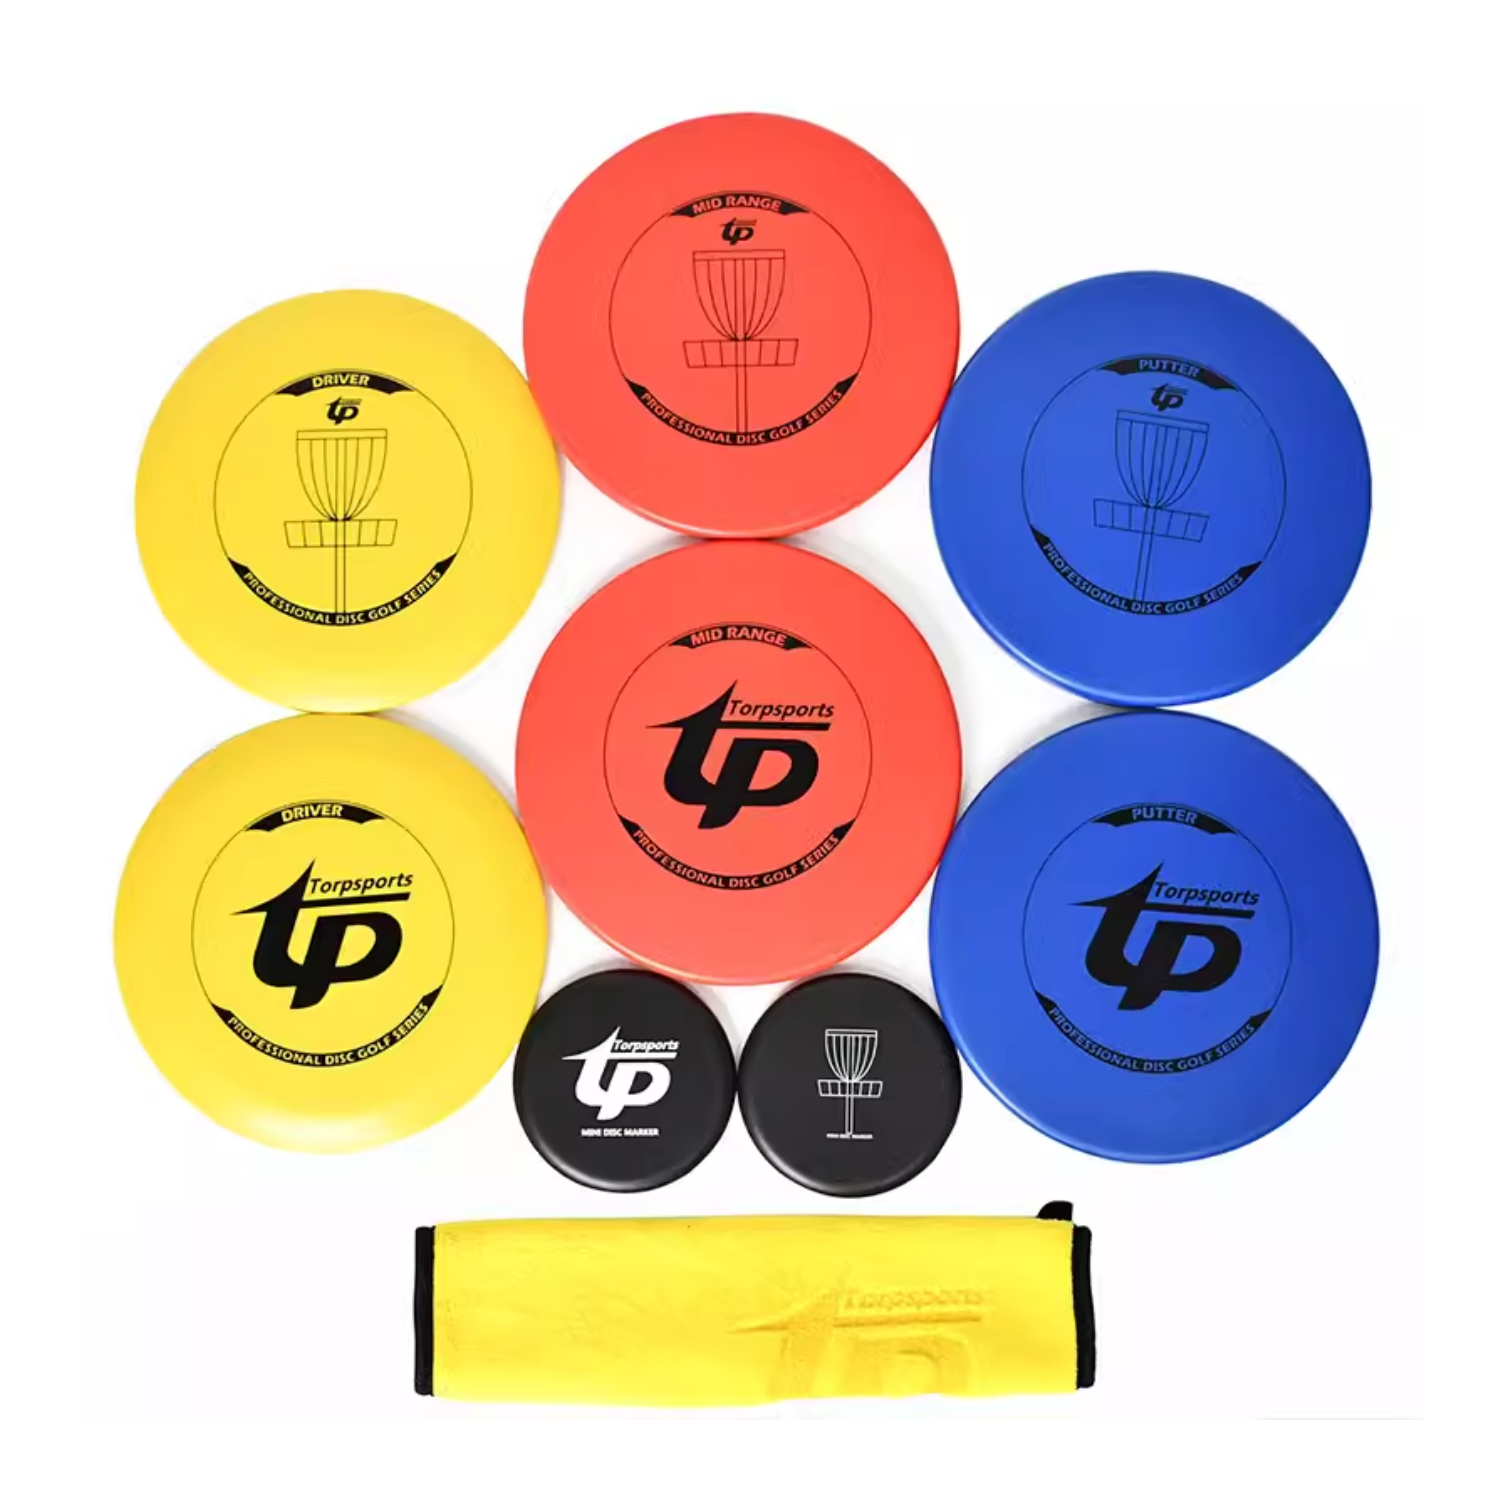 Uxuan Sports Flying Discs Set of 8